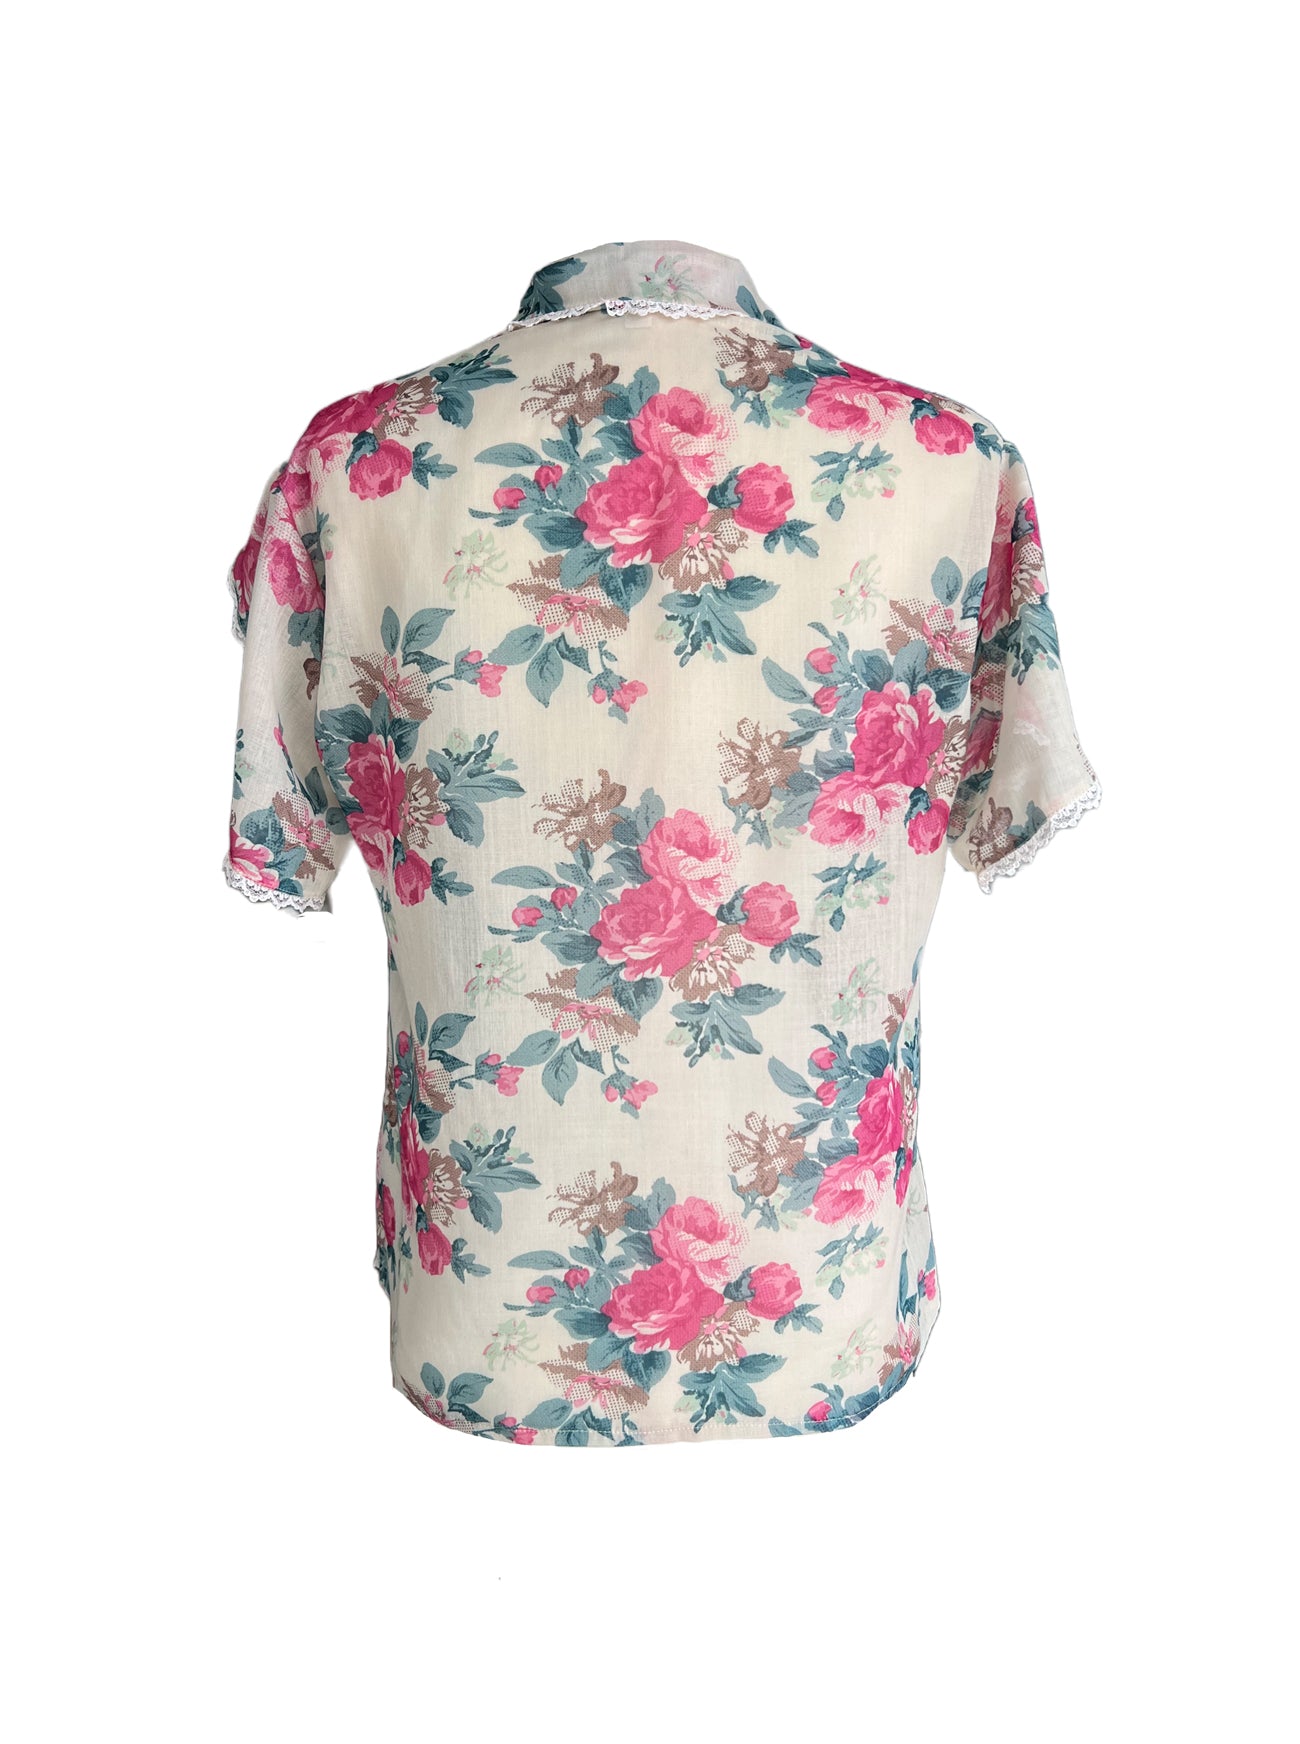 rosemary garden print blouse back view